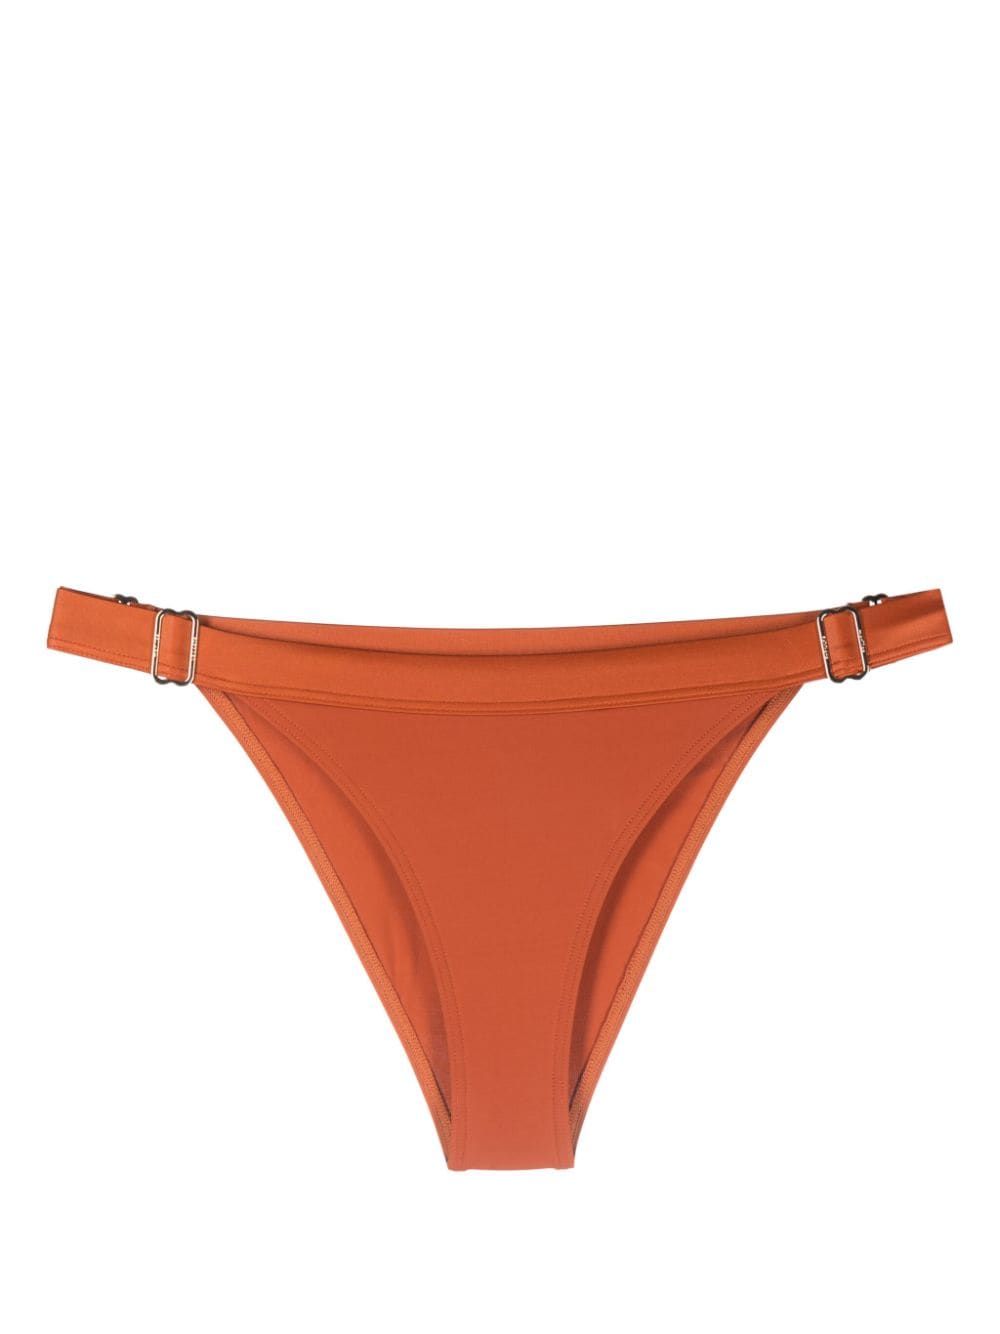 Marlies Dekkers Cache Coeur tanga bikini bottoms - Orange von Marlies Dekkers